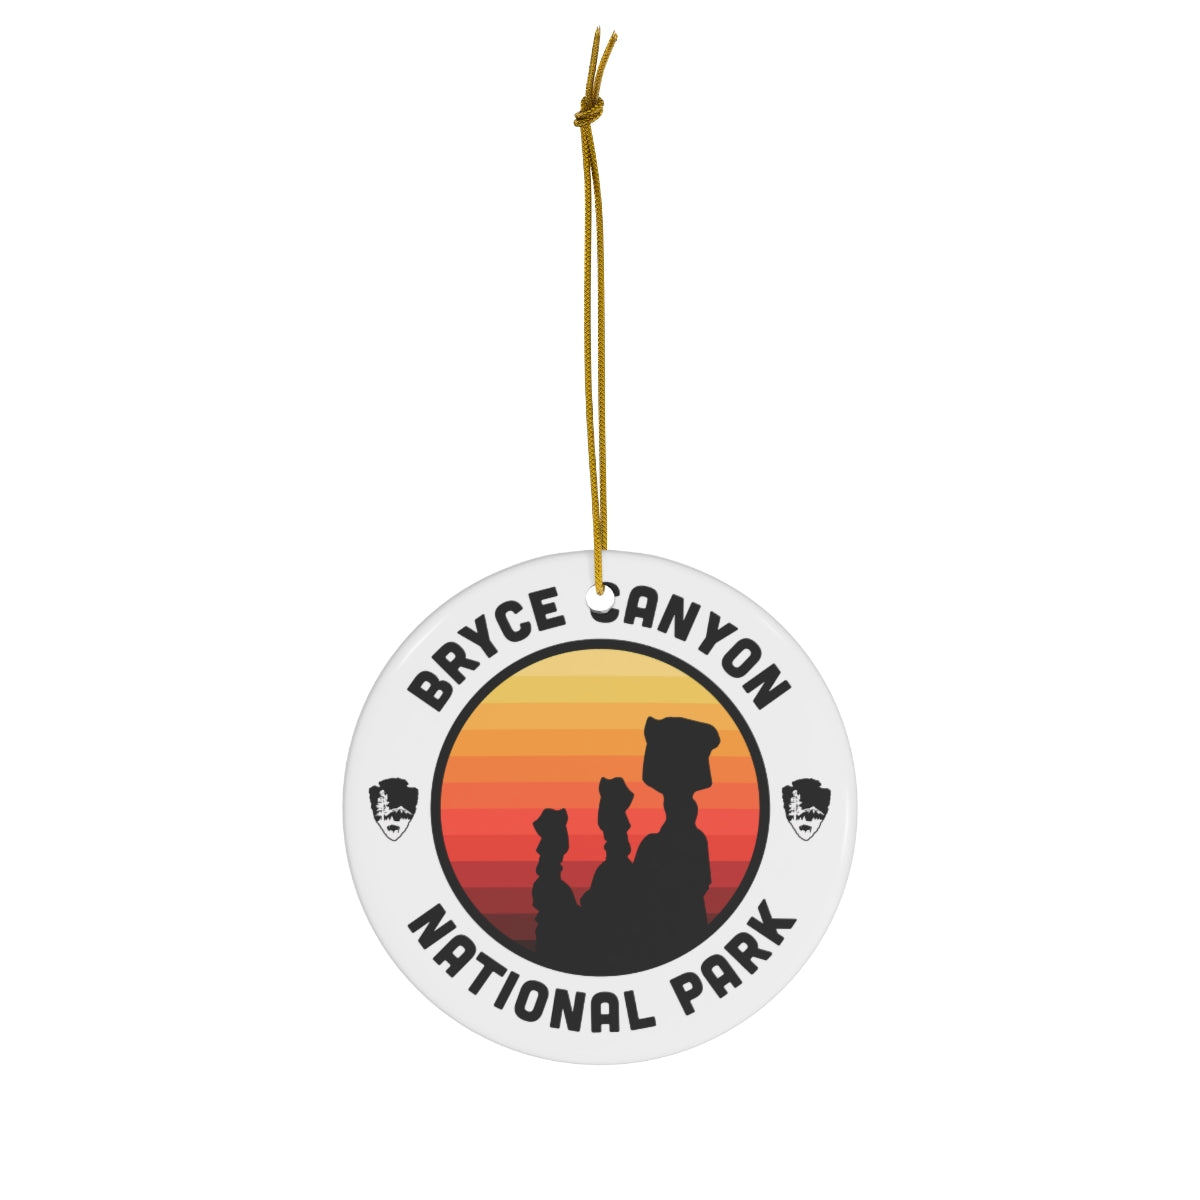 Bryce Canyon National Park Ornament - Round Emblem Design